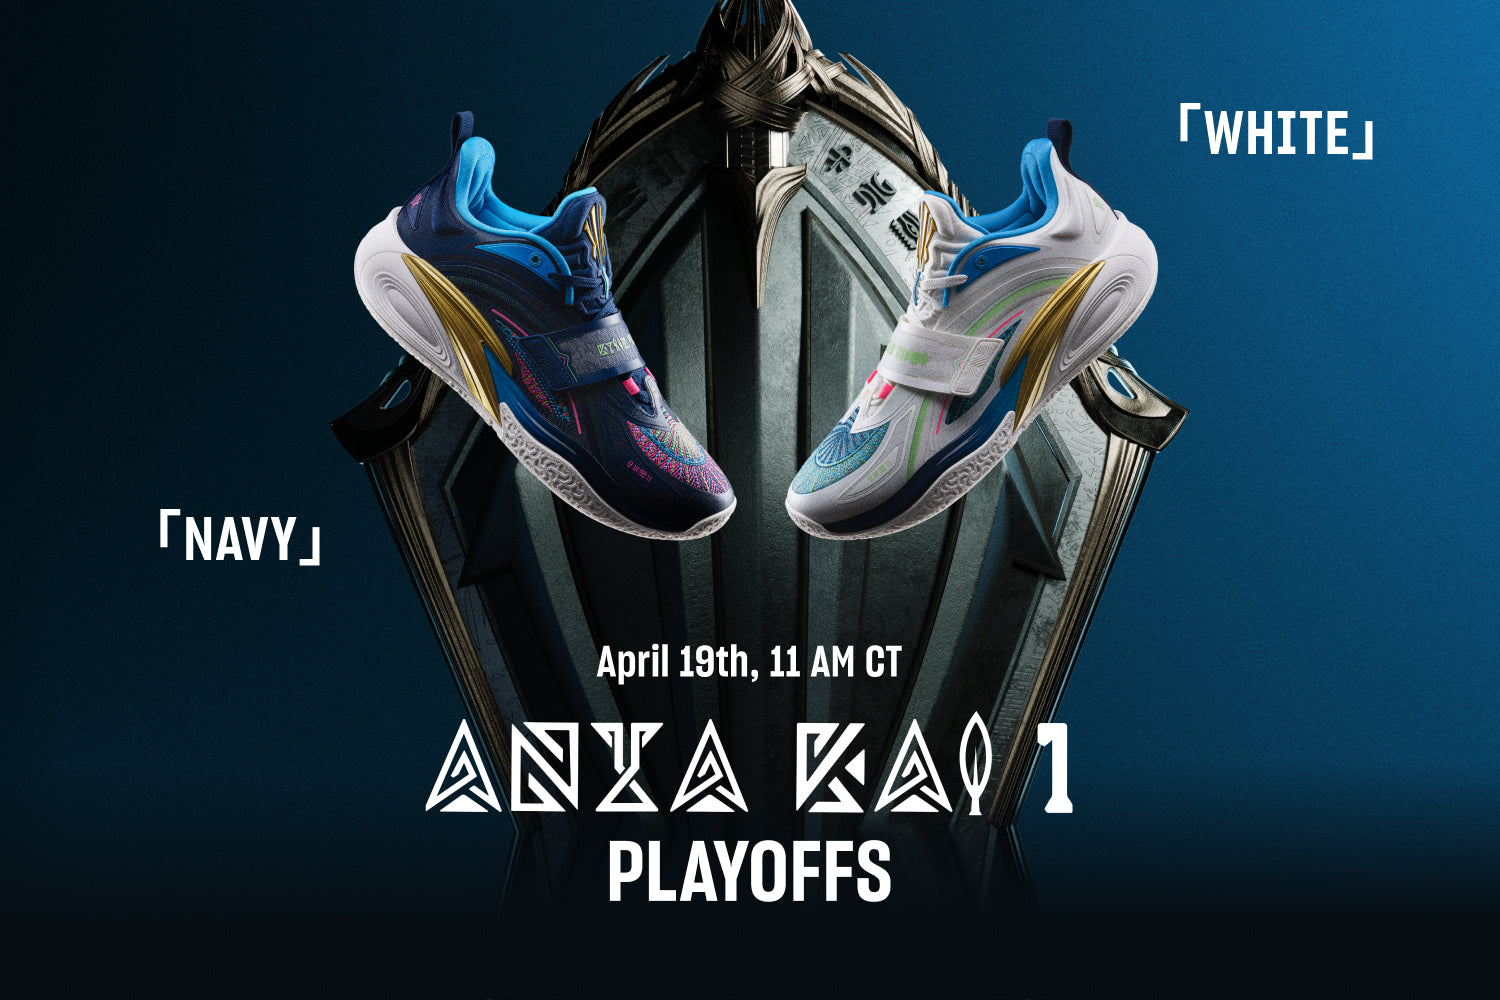 ANTA KAI 1 "Playoffs" Kyrie Irving Basketball Shoes